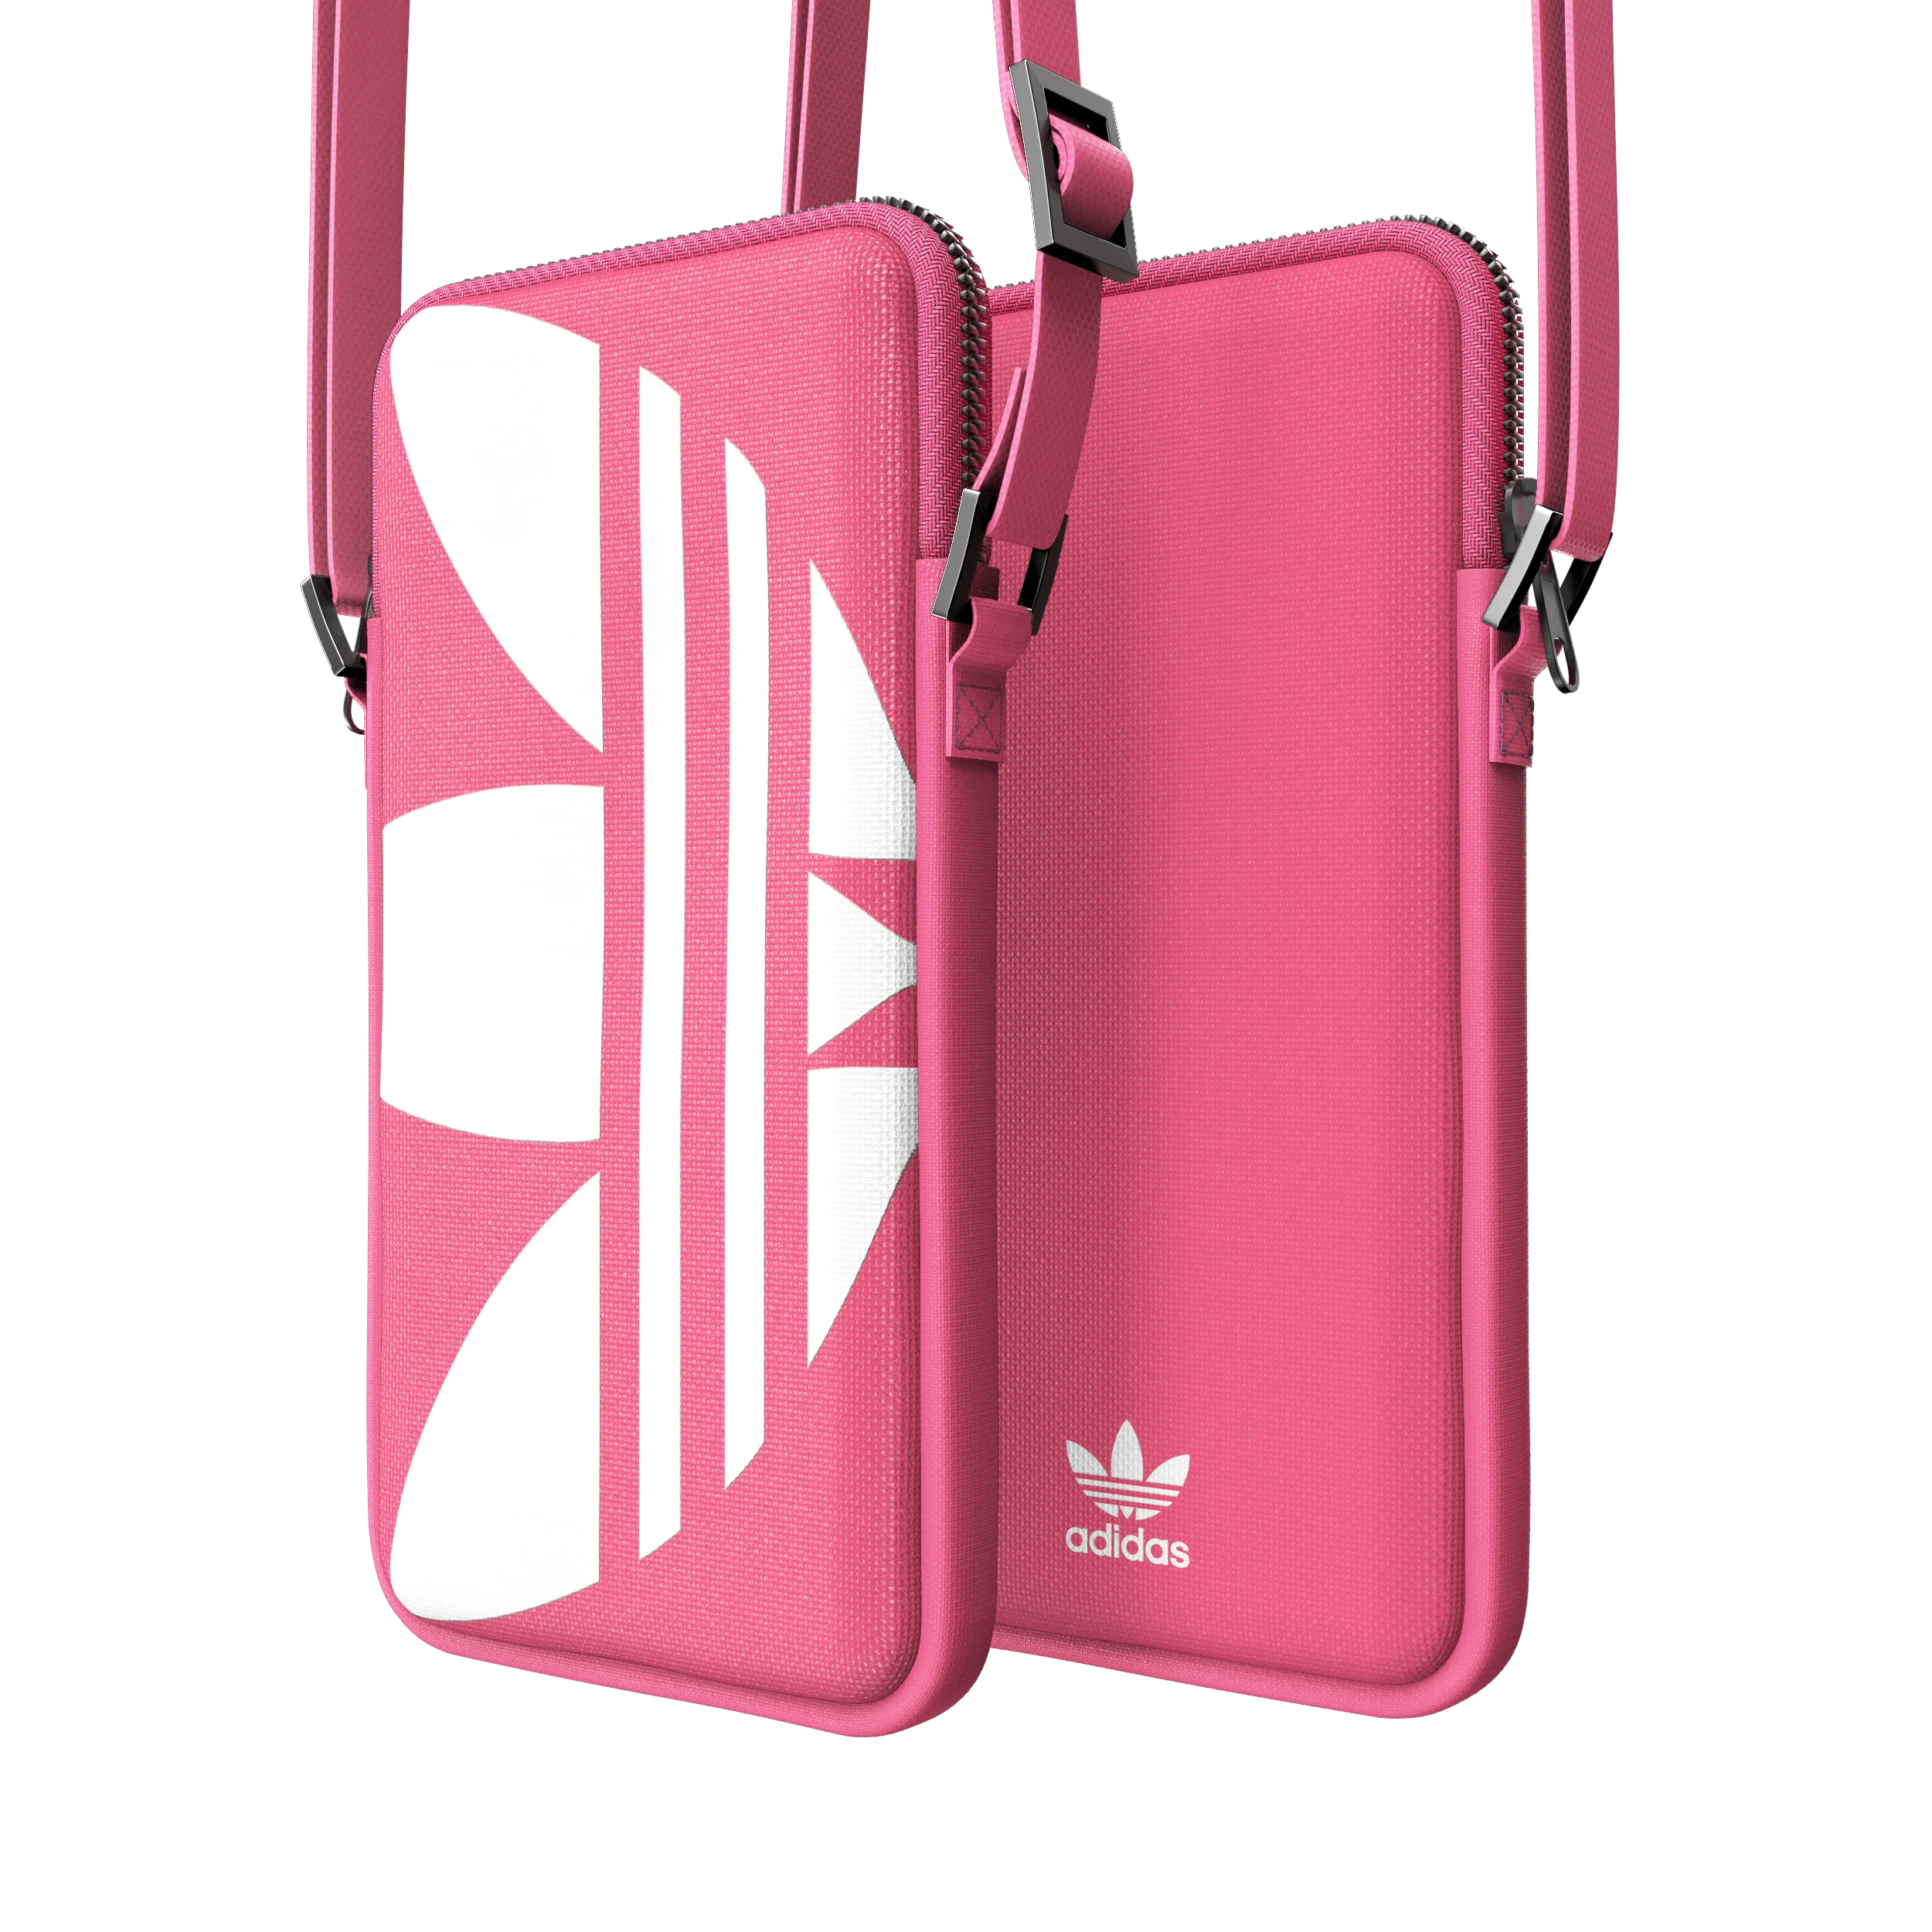 Adidas Oiginals Universal City Pouch - Pink